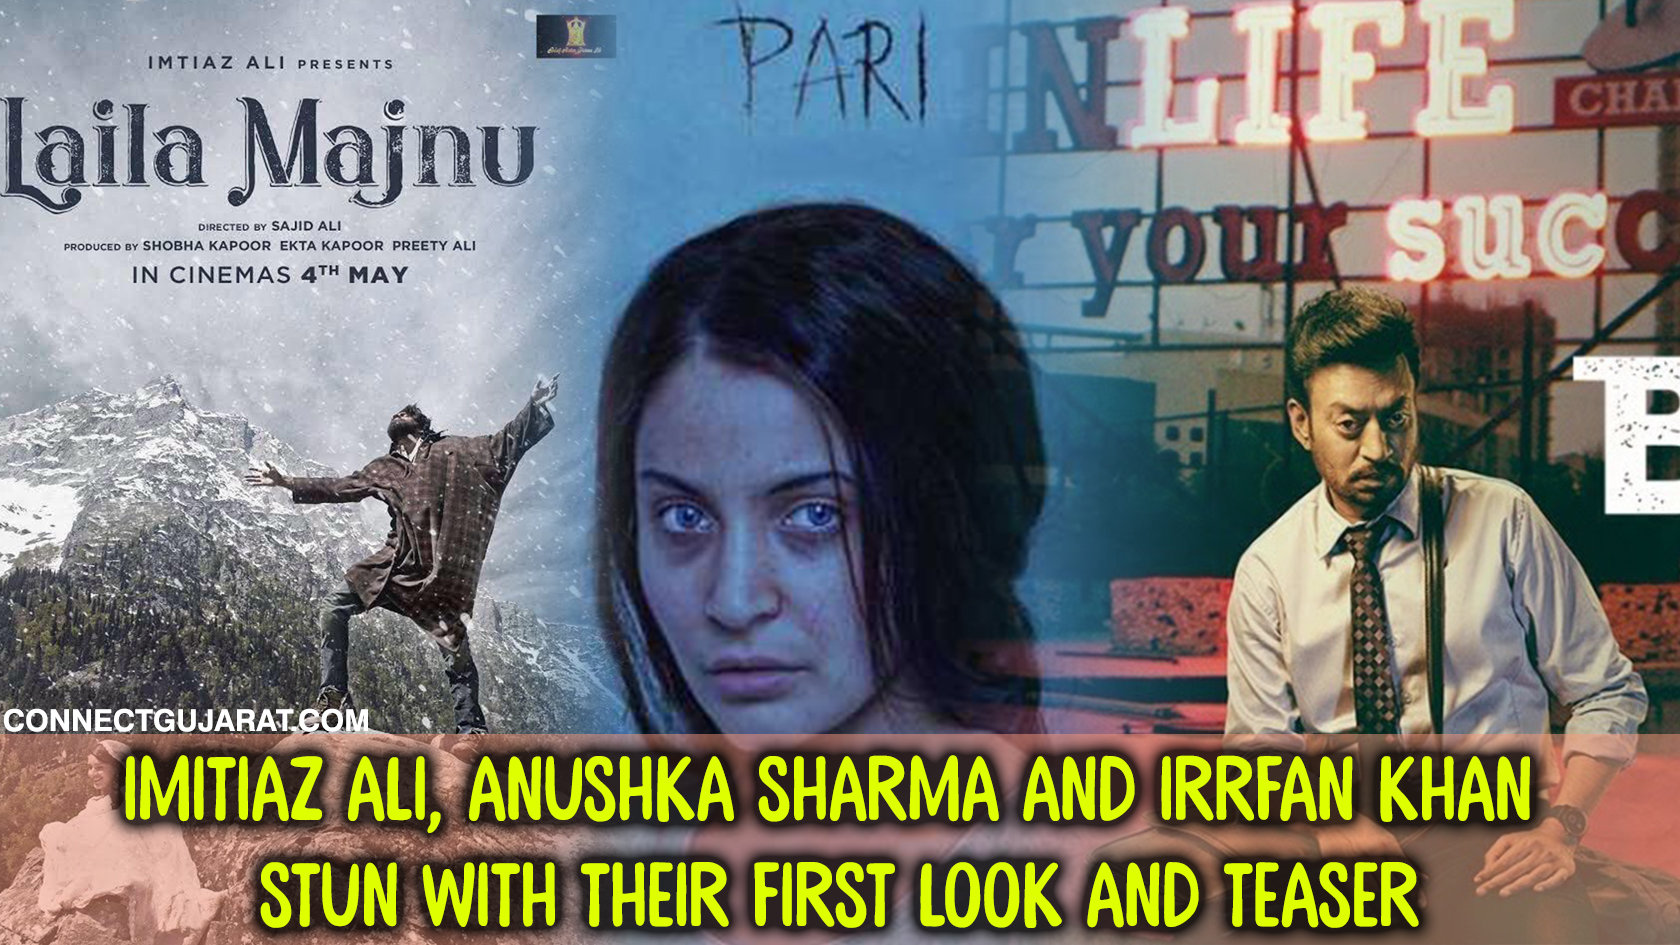 Imitiaz Ali, Irrfan Khan and Anushka Sharma stun with their first look and teaser